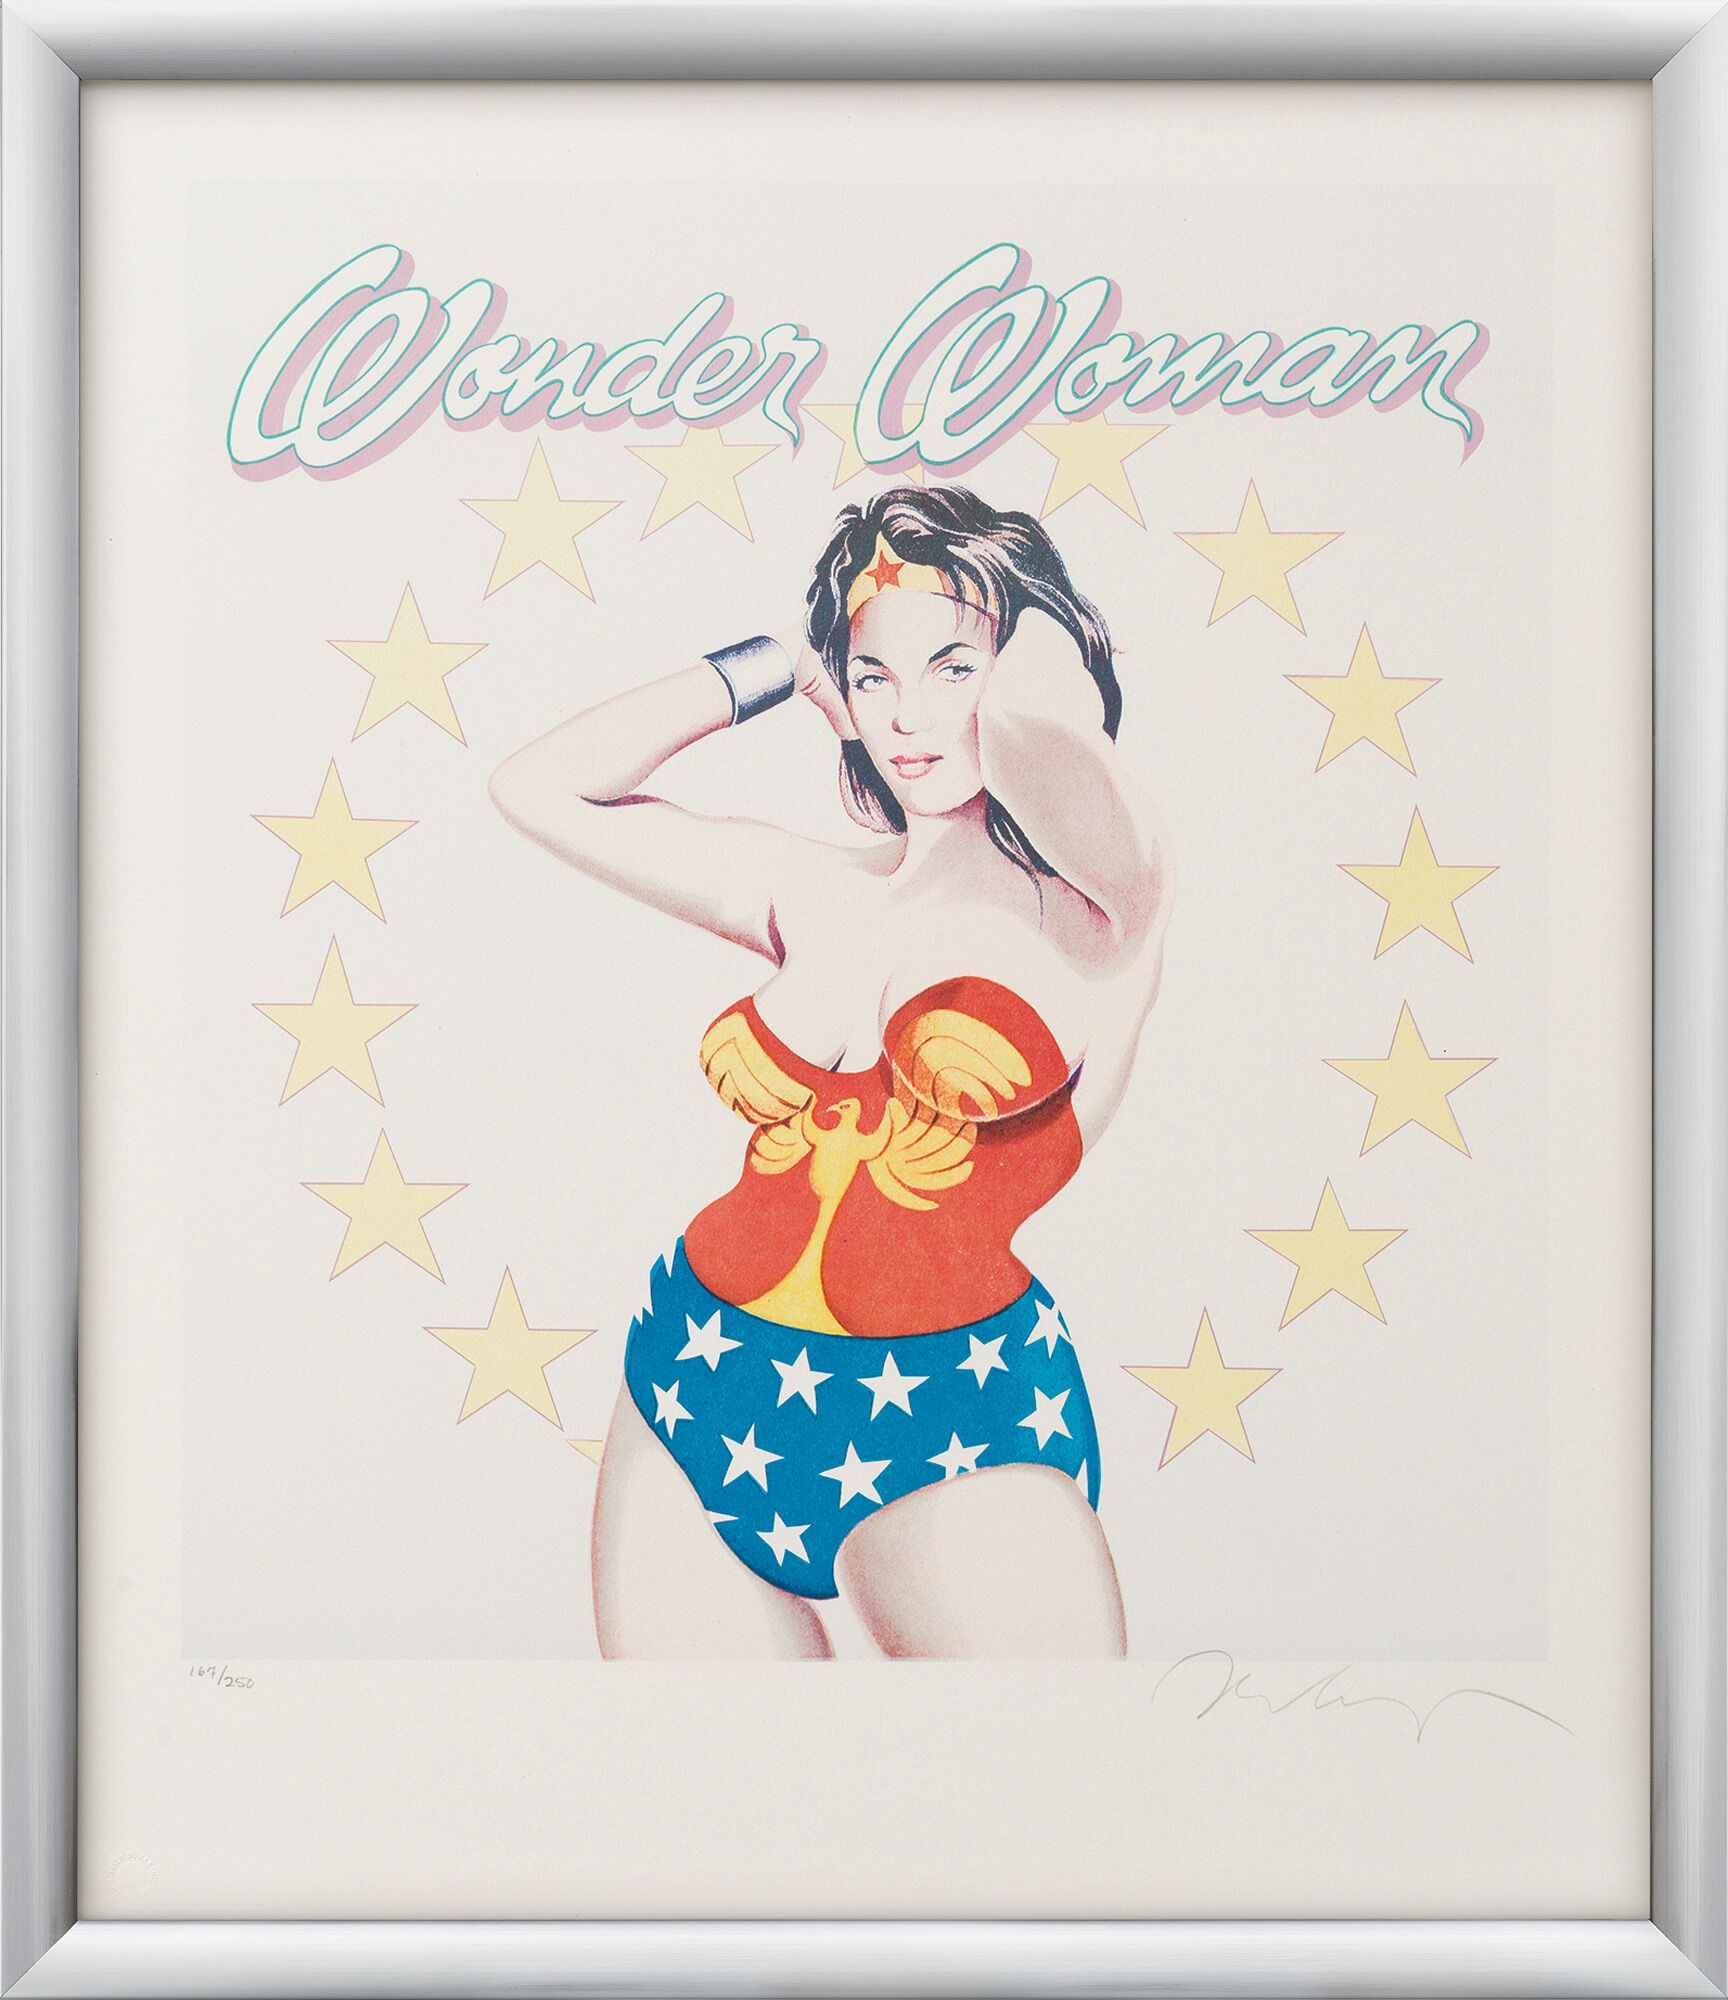 Tableau "Wonder Woman" (1979) von Mel Ramos